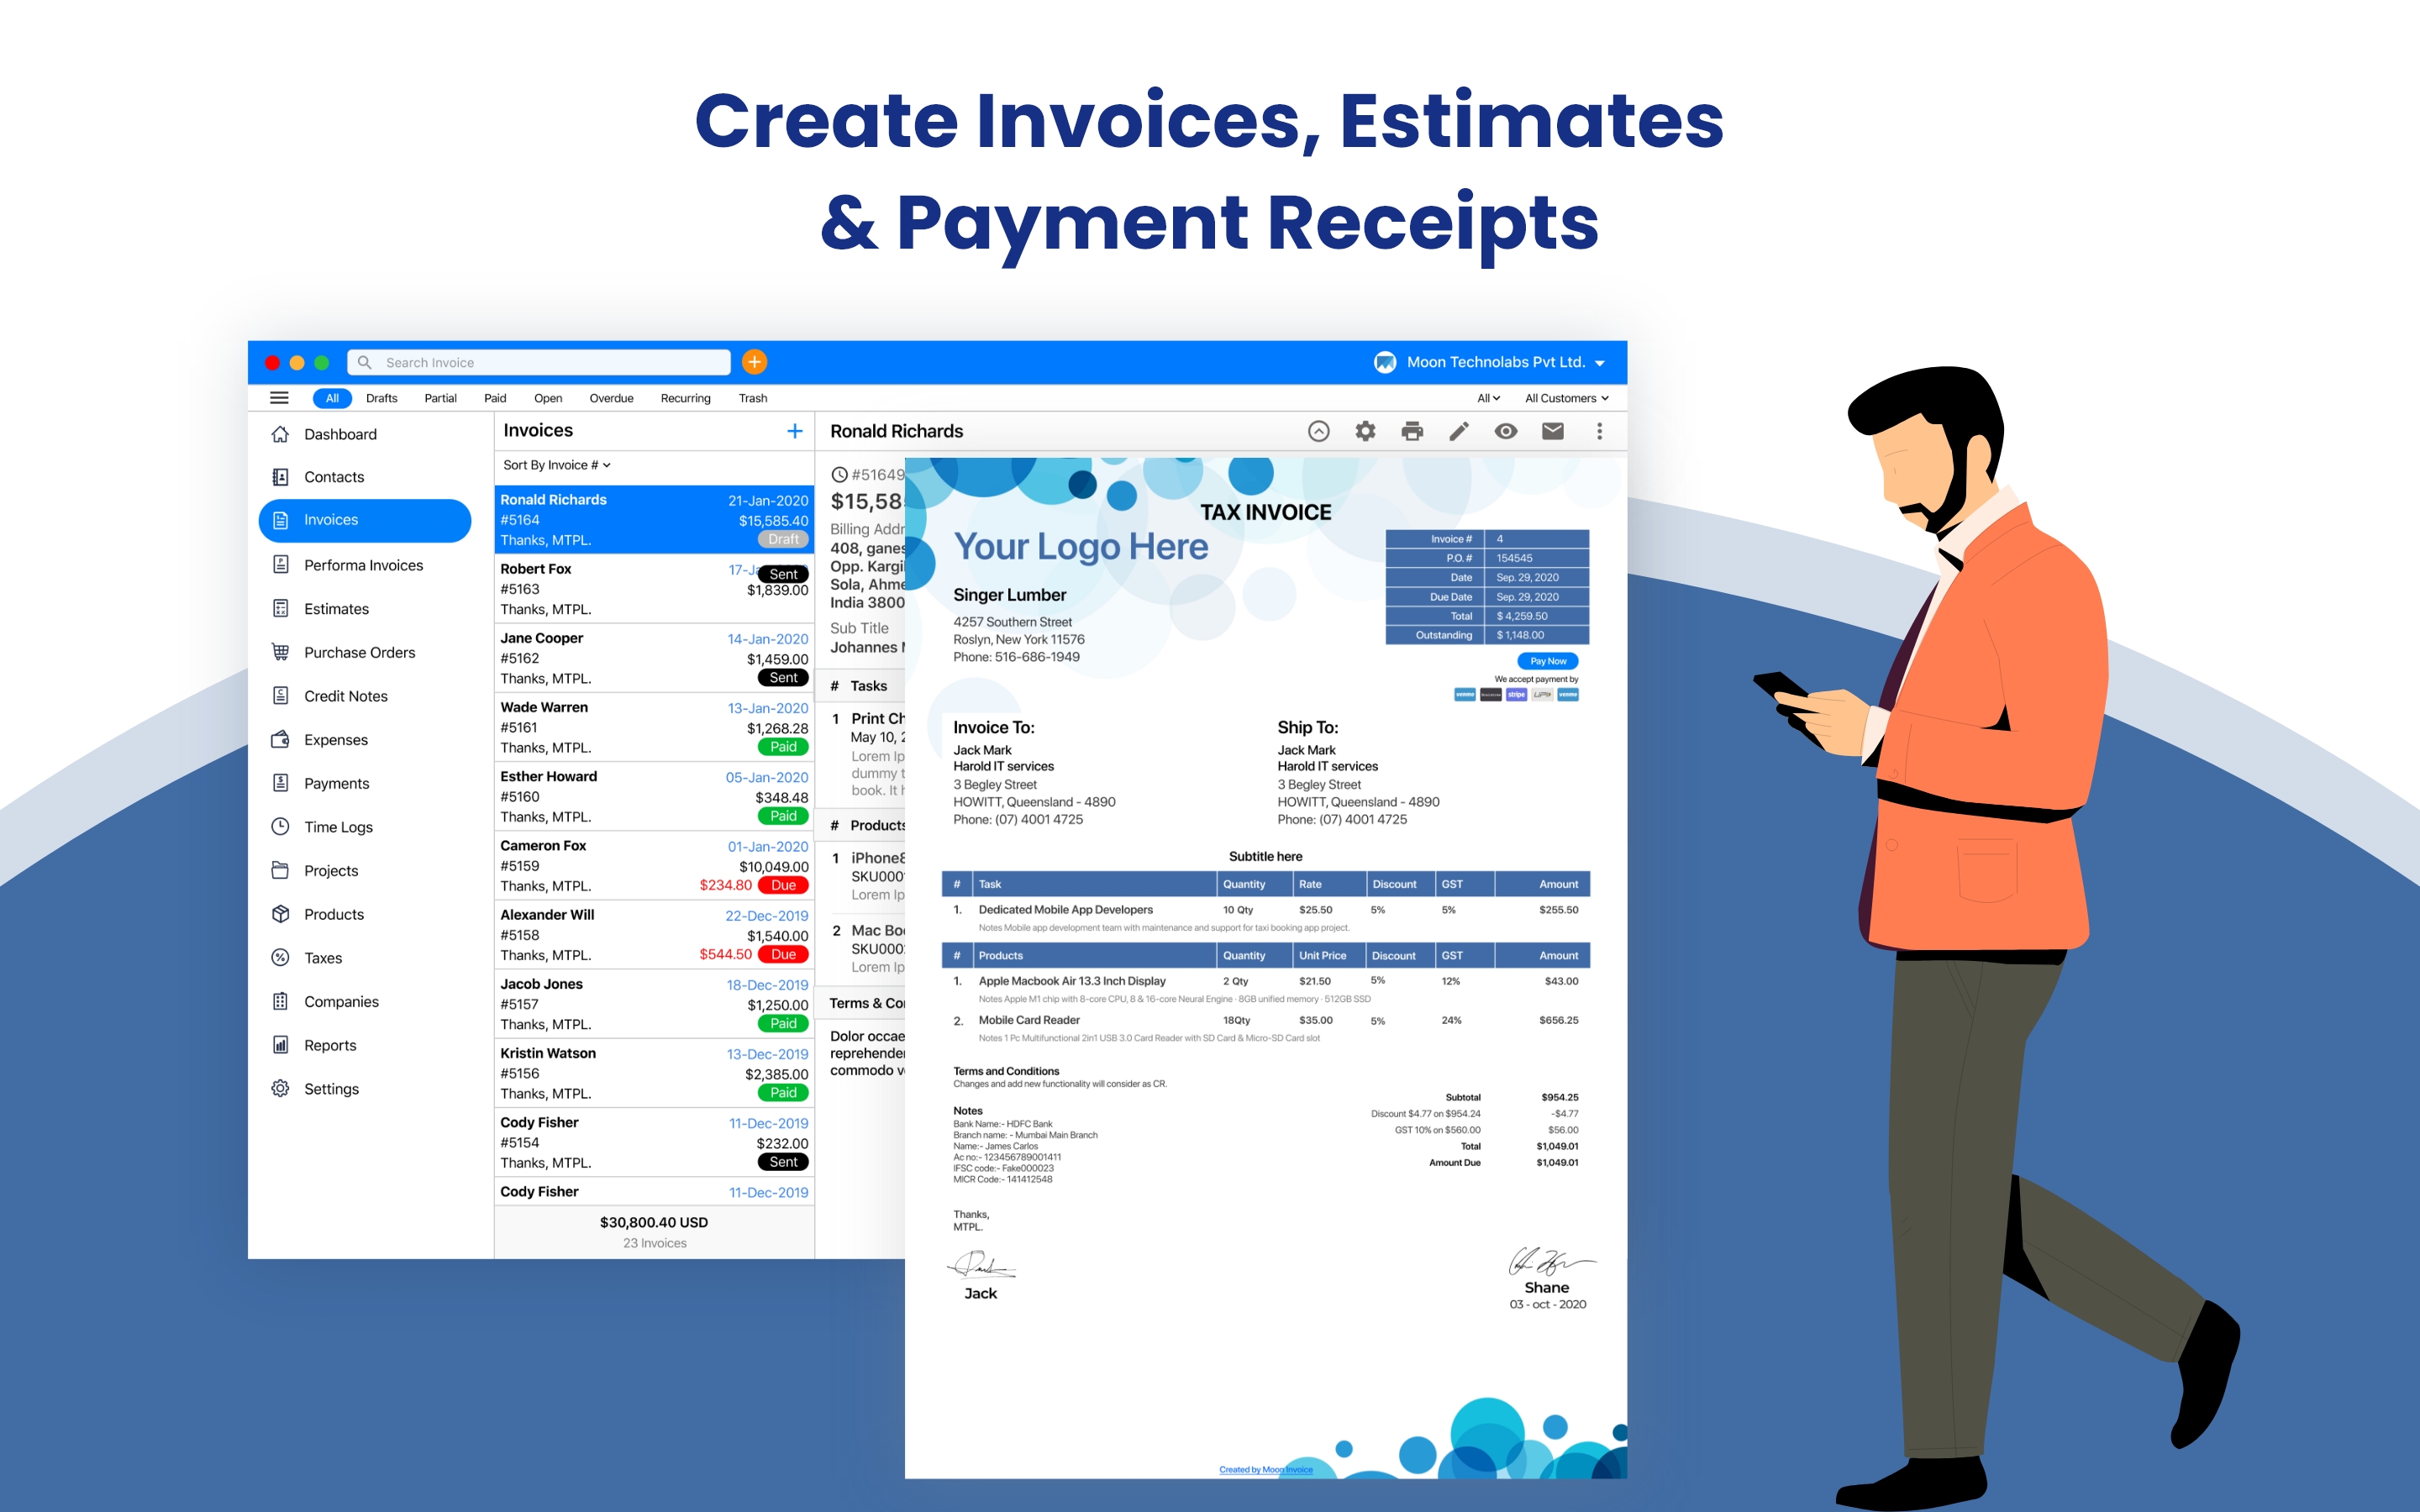 Create Invoices, Estimates & Payment Receipts